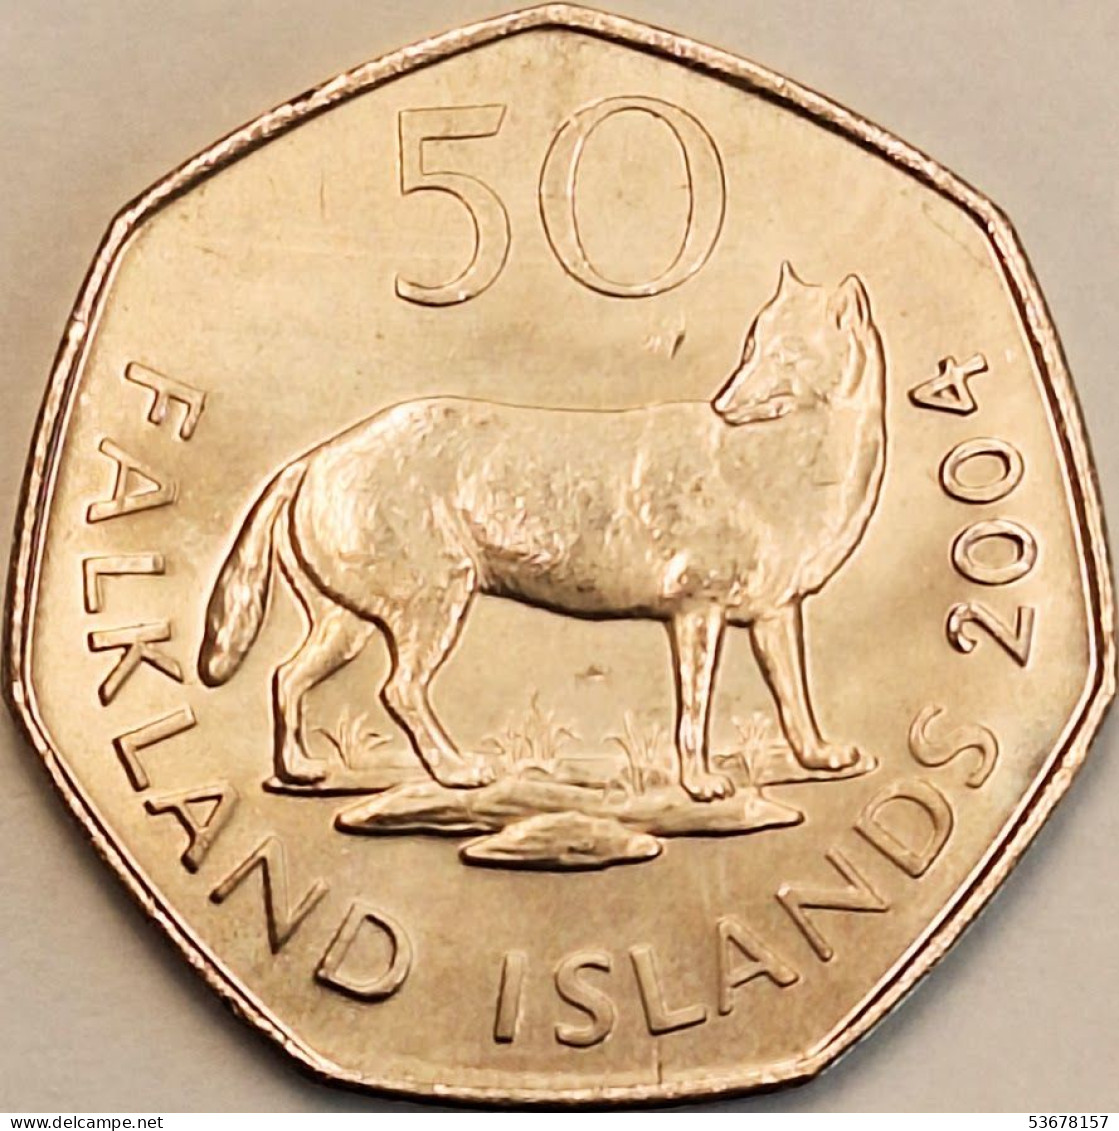 Falkland Islands - 50 Pence 2004, KM# 135 (#3862) - Falkland